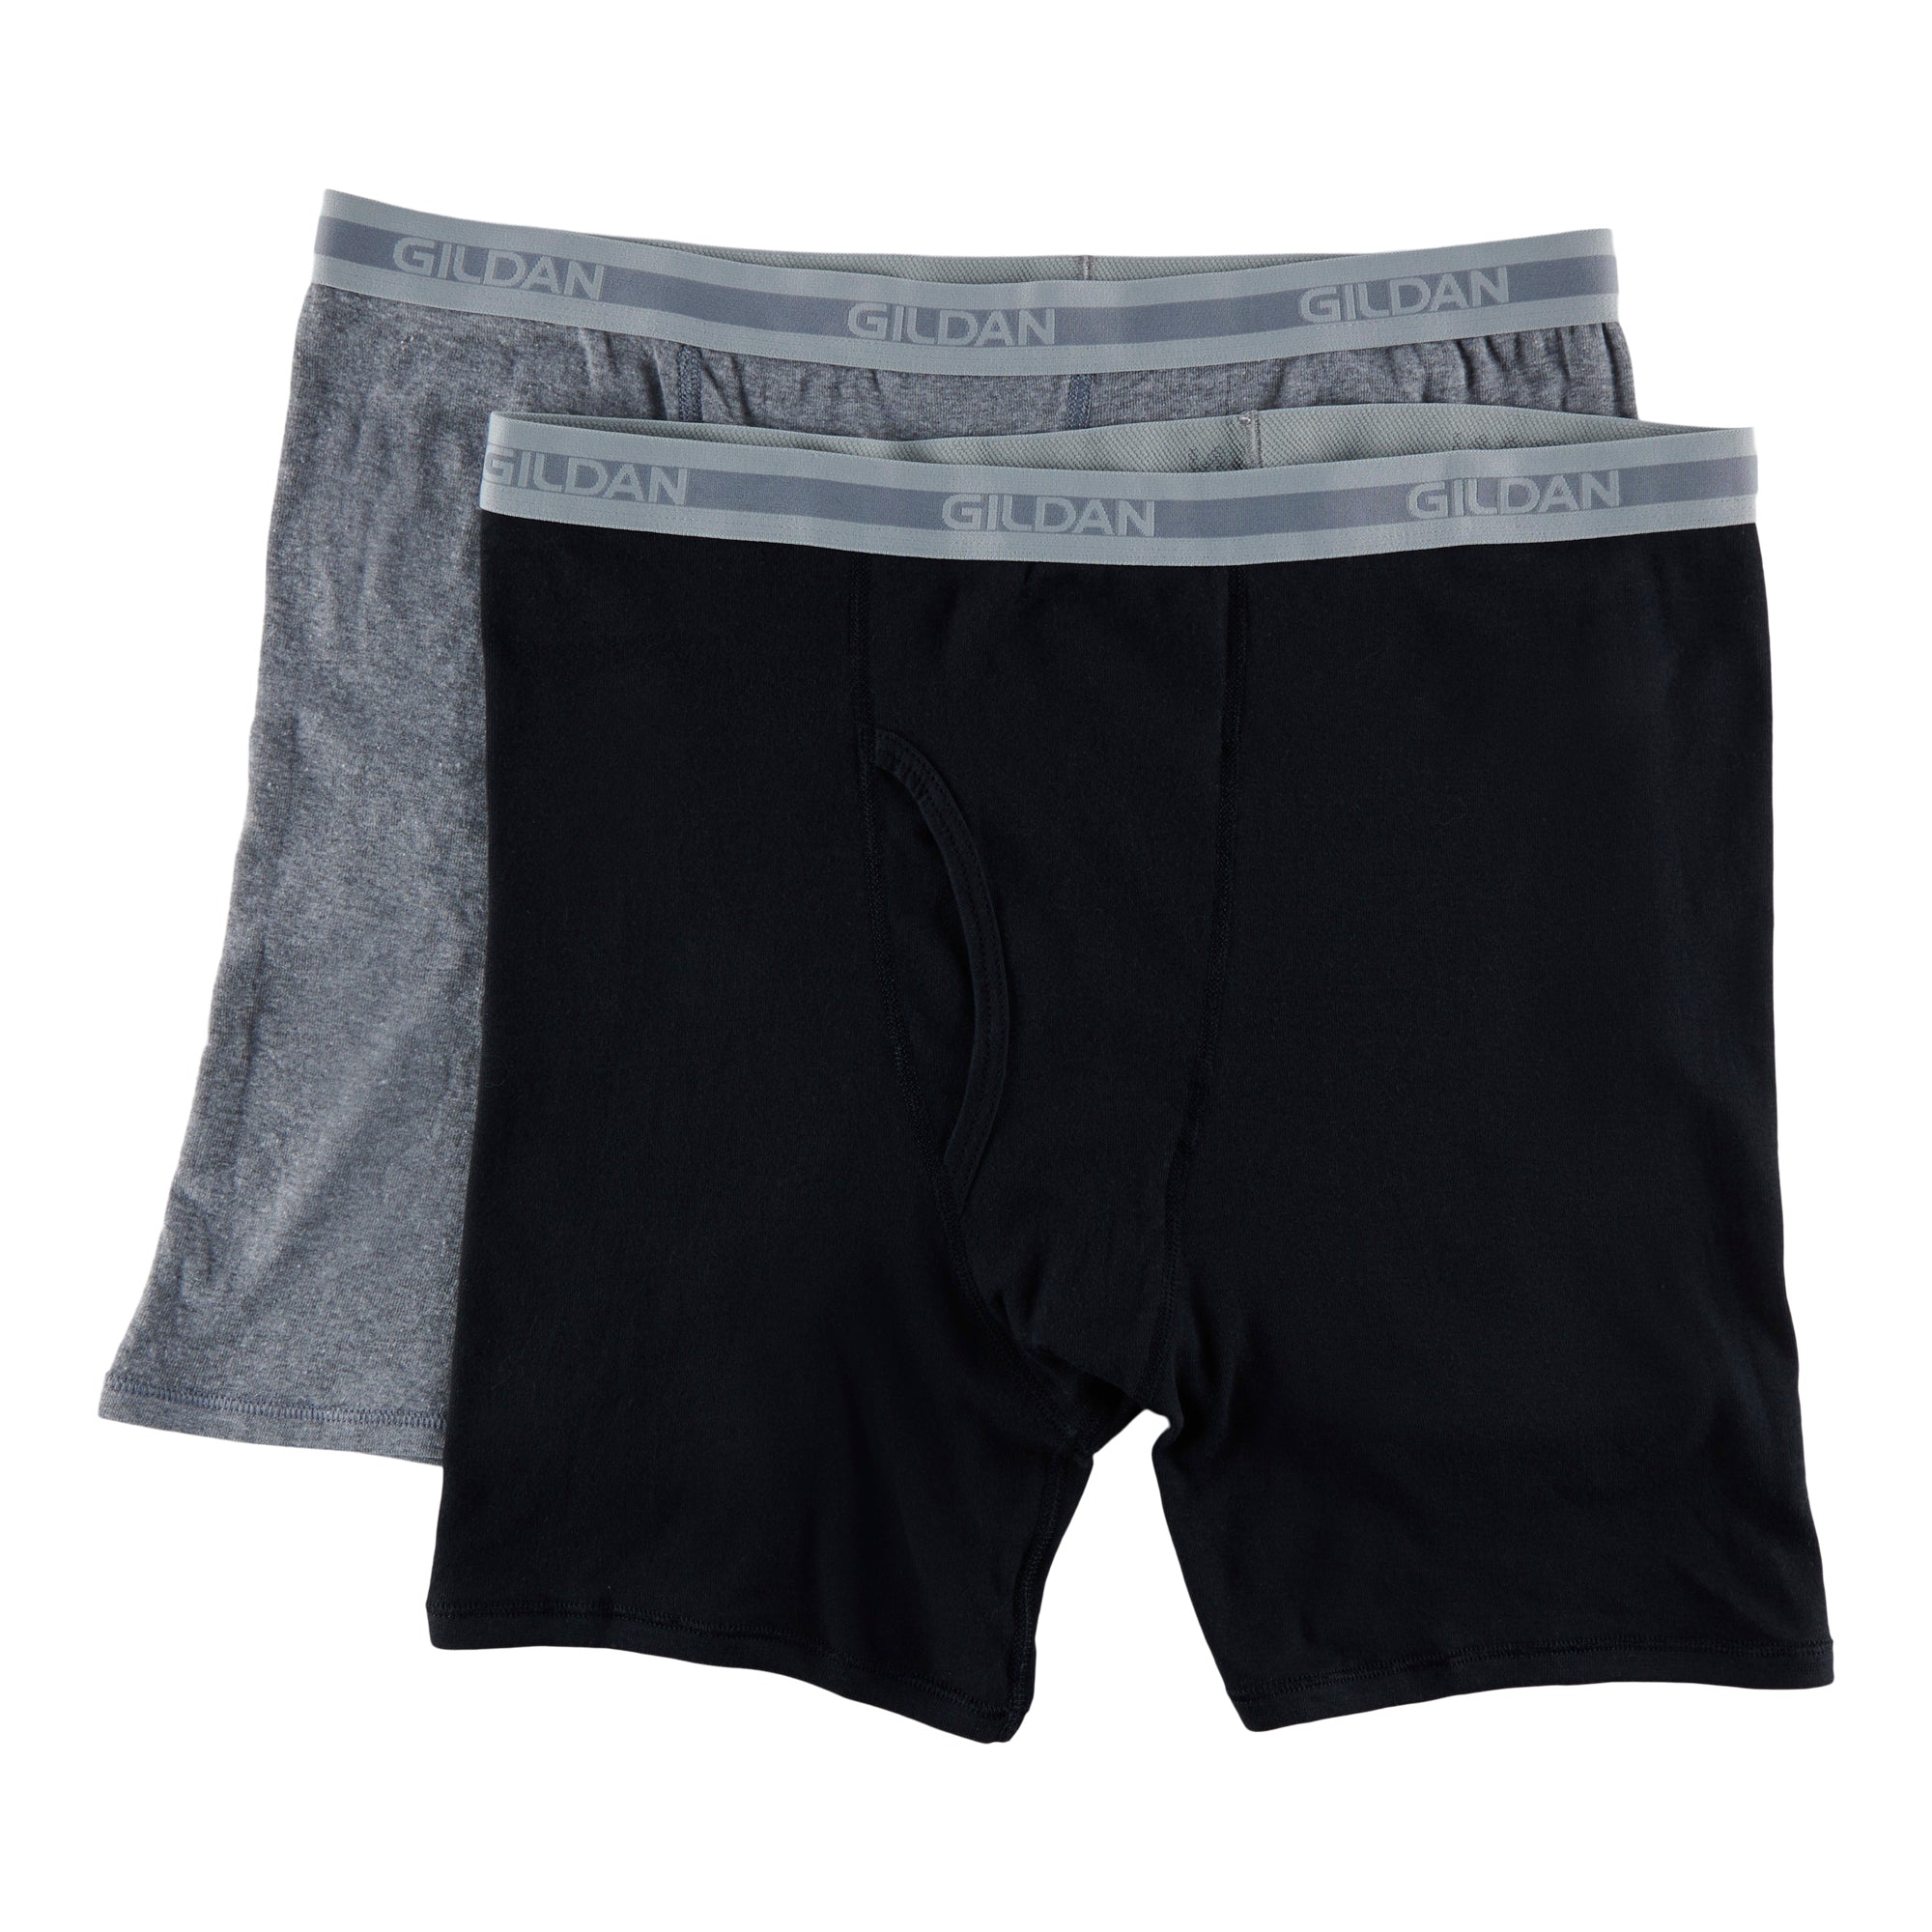 Gildan Men's Brief Underwear Multipack